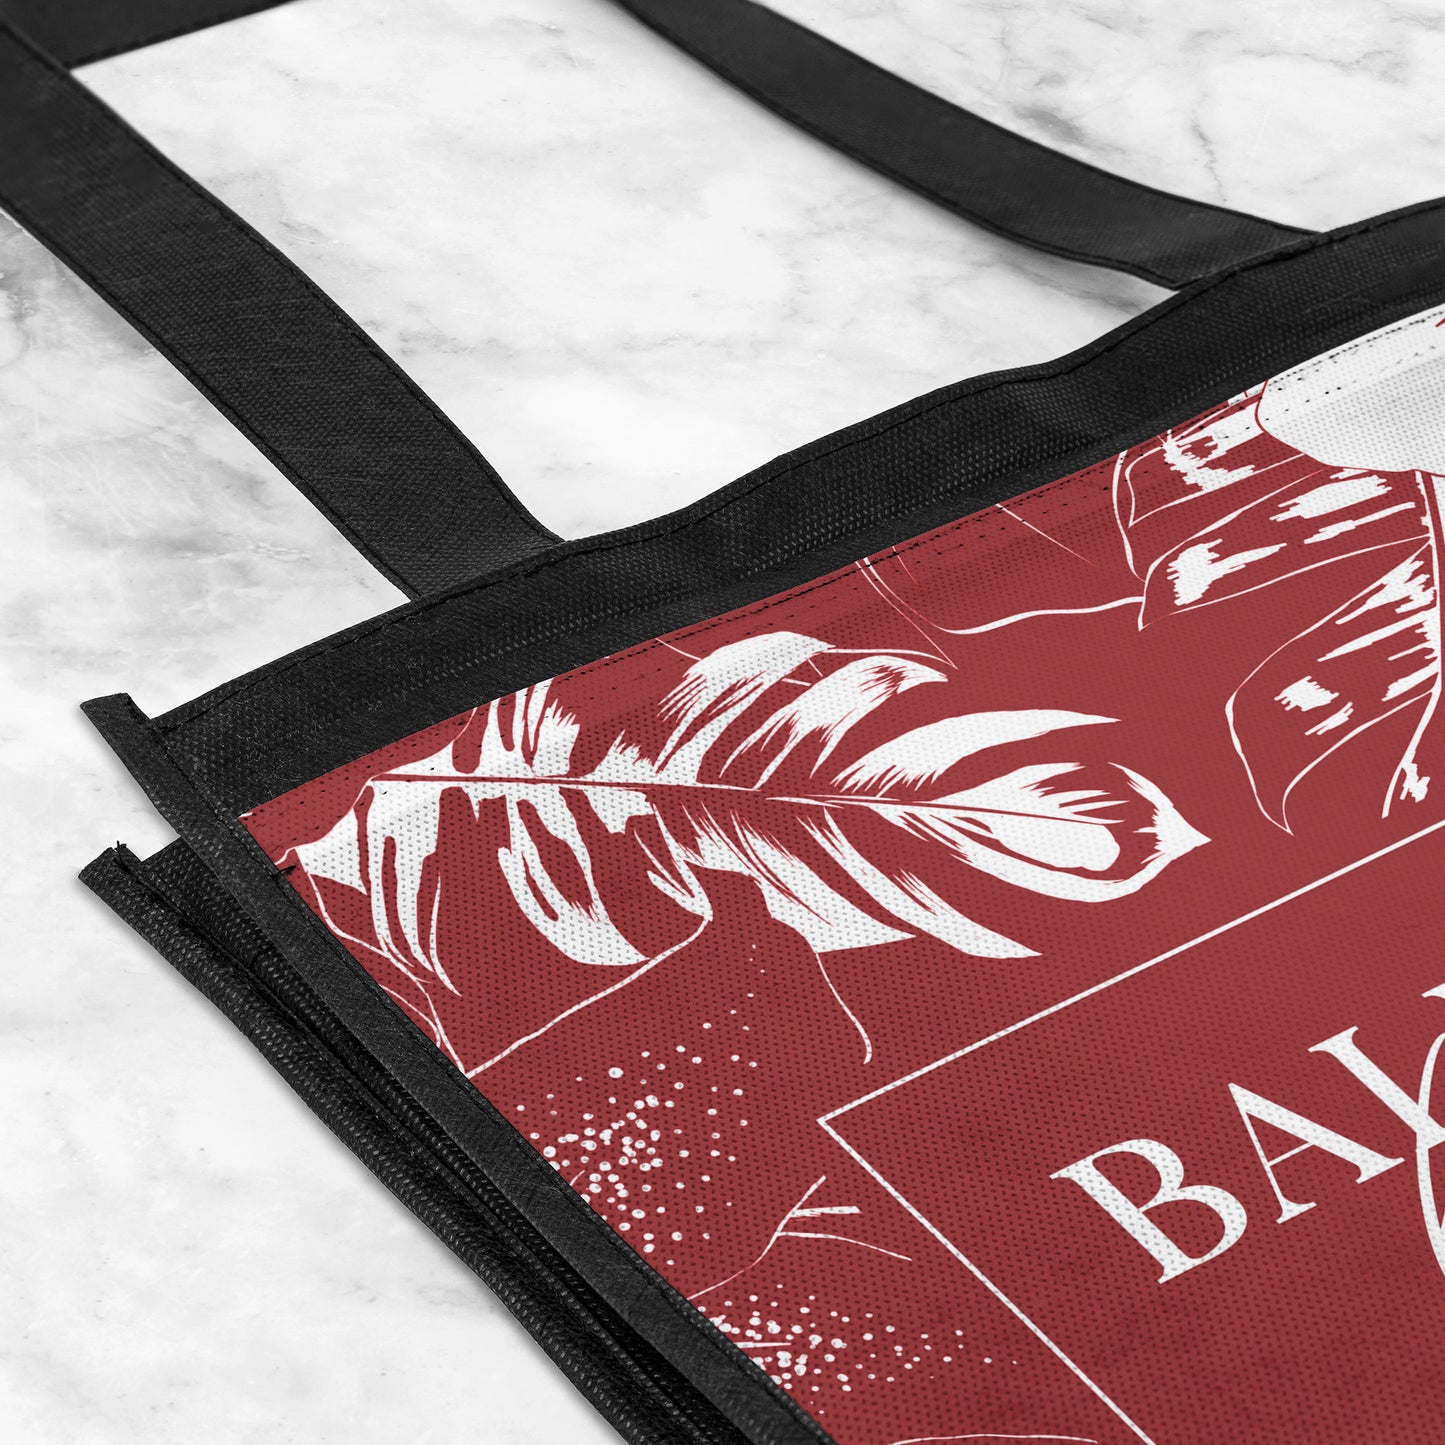 Balutan Bag Guam CNMI Red Floral Grocery Tote Bag